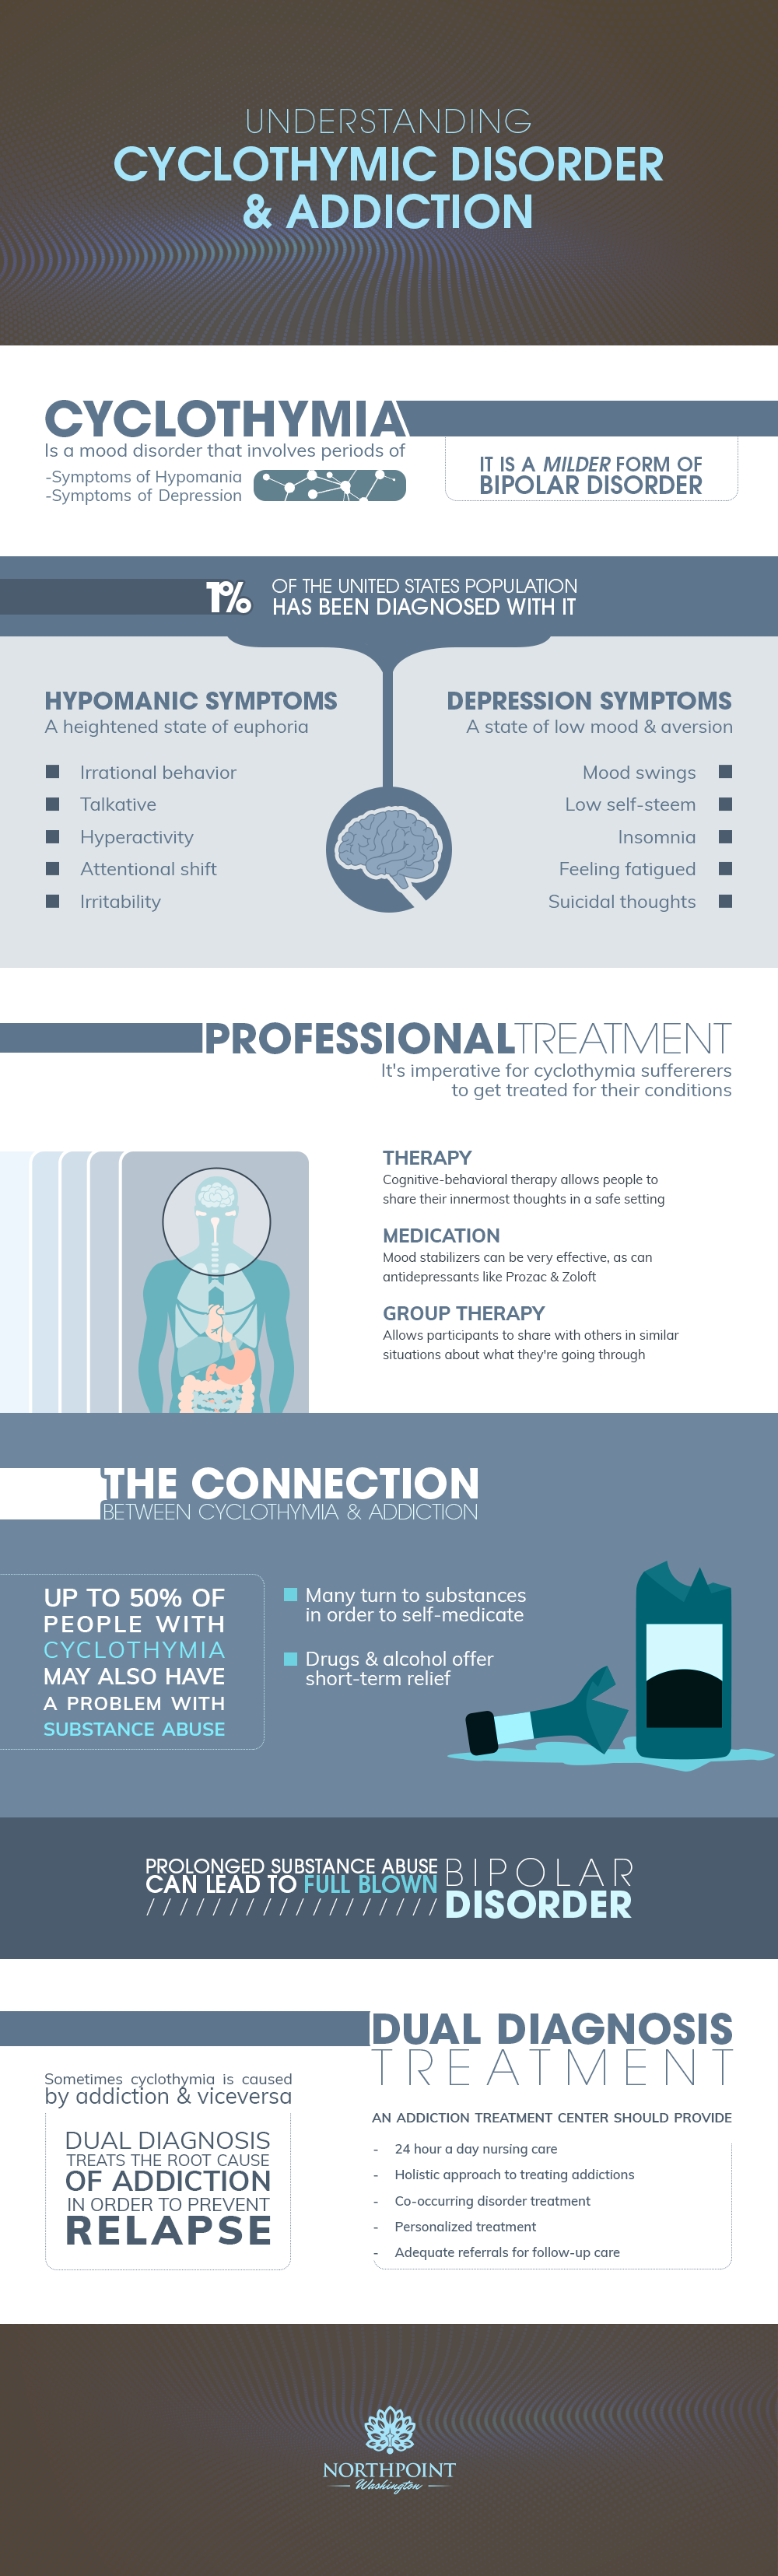 Cyclothymia and Addiction Infographic